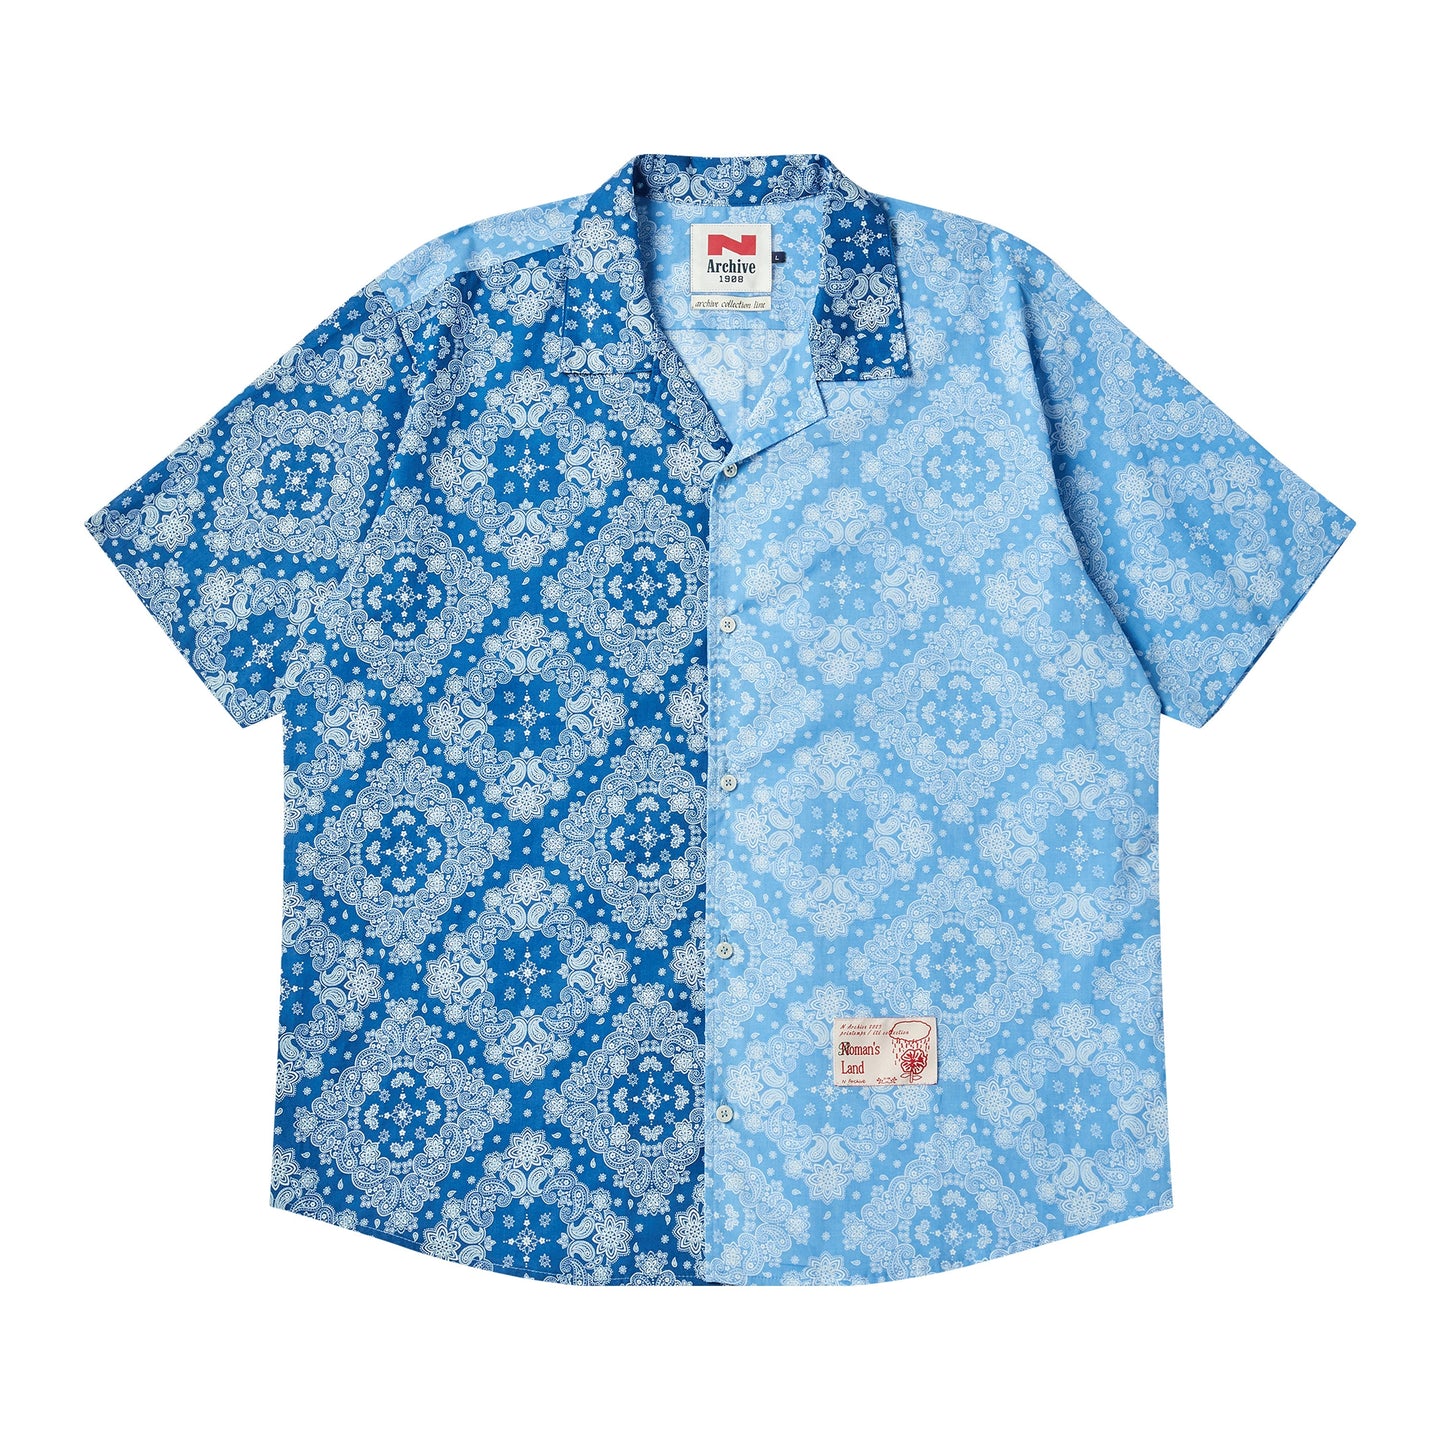 BEYOND CLOSET Collection Line Archive Bandana Patch Open Collar Shirt Blue